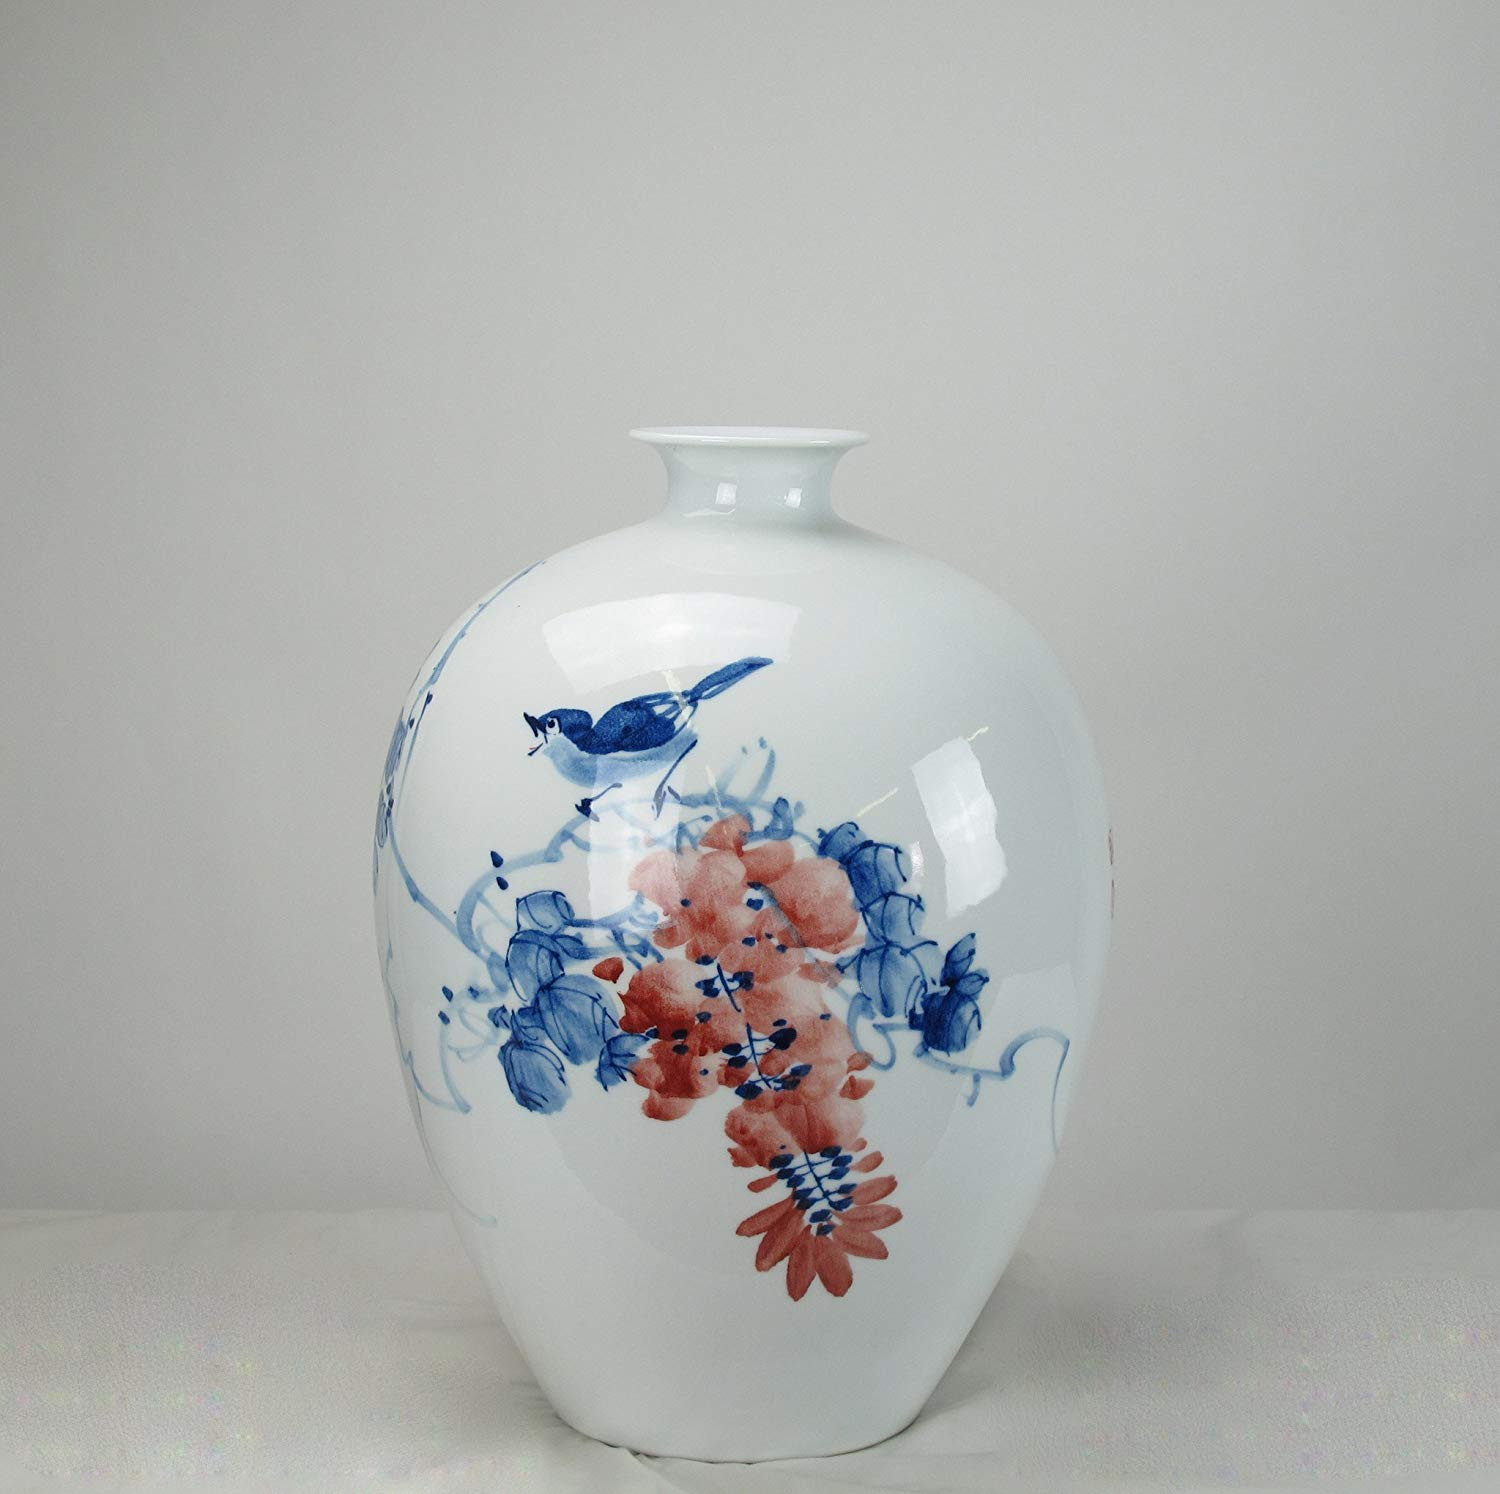 large white ceramic vase of amazon com blue white red flower and blue vines porcelain vase with amazon com blue white red flower and blue vines porcelain vase home kitchen